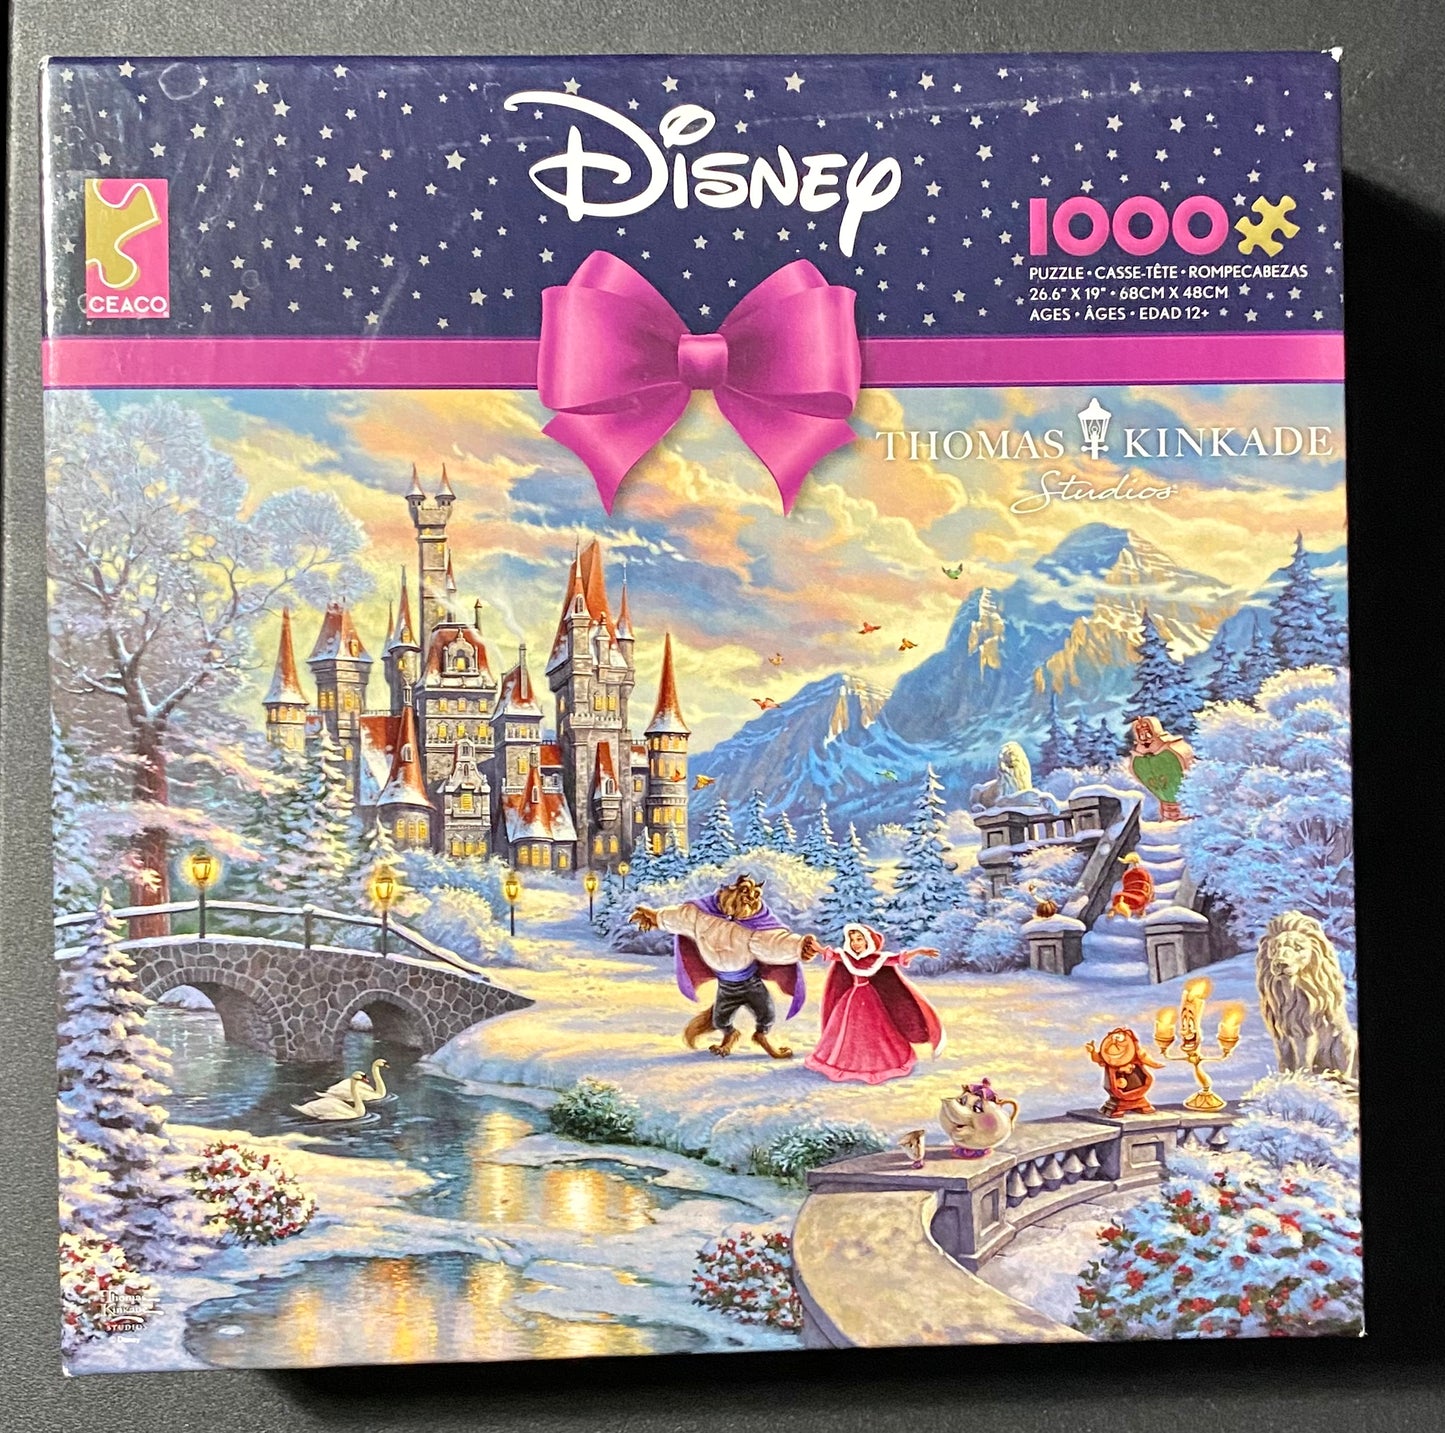 Disney Thomas Kinkade Beauty and the Beast 1000-Piece Jigsaw Puzzle 332705